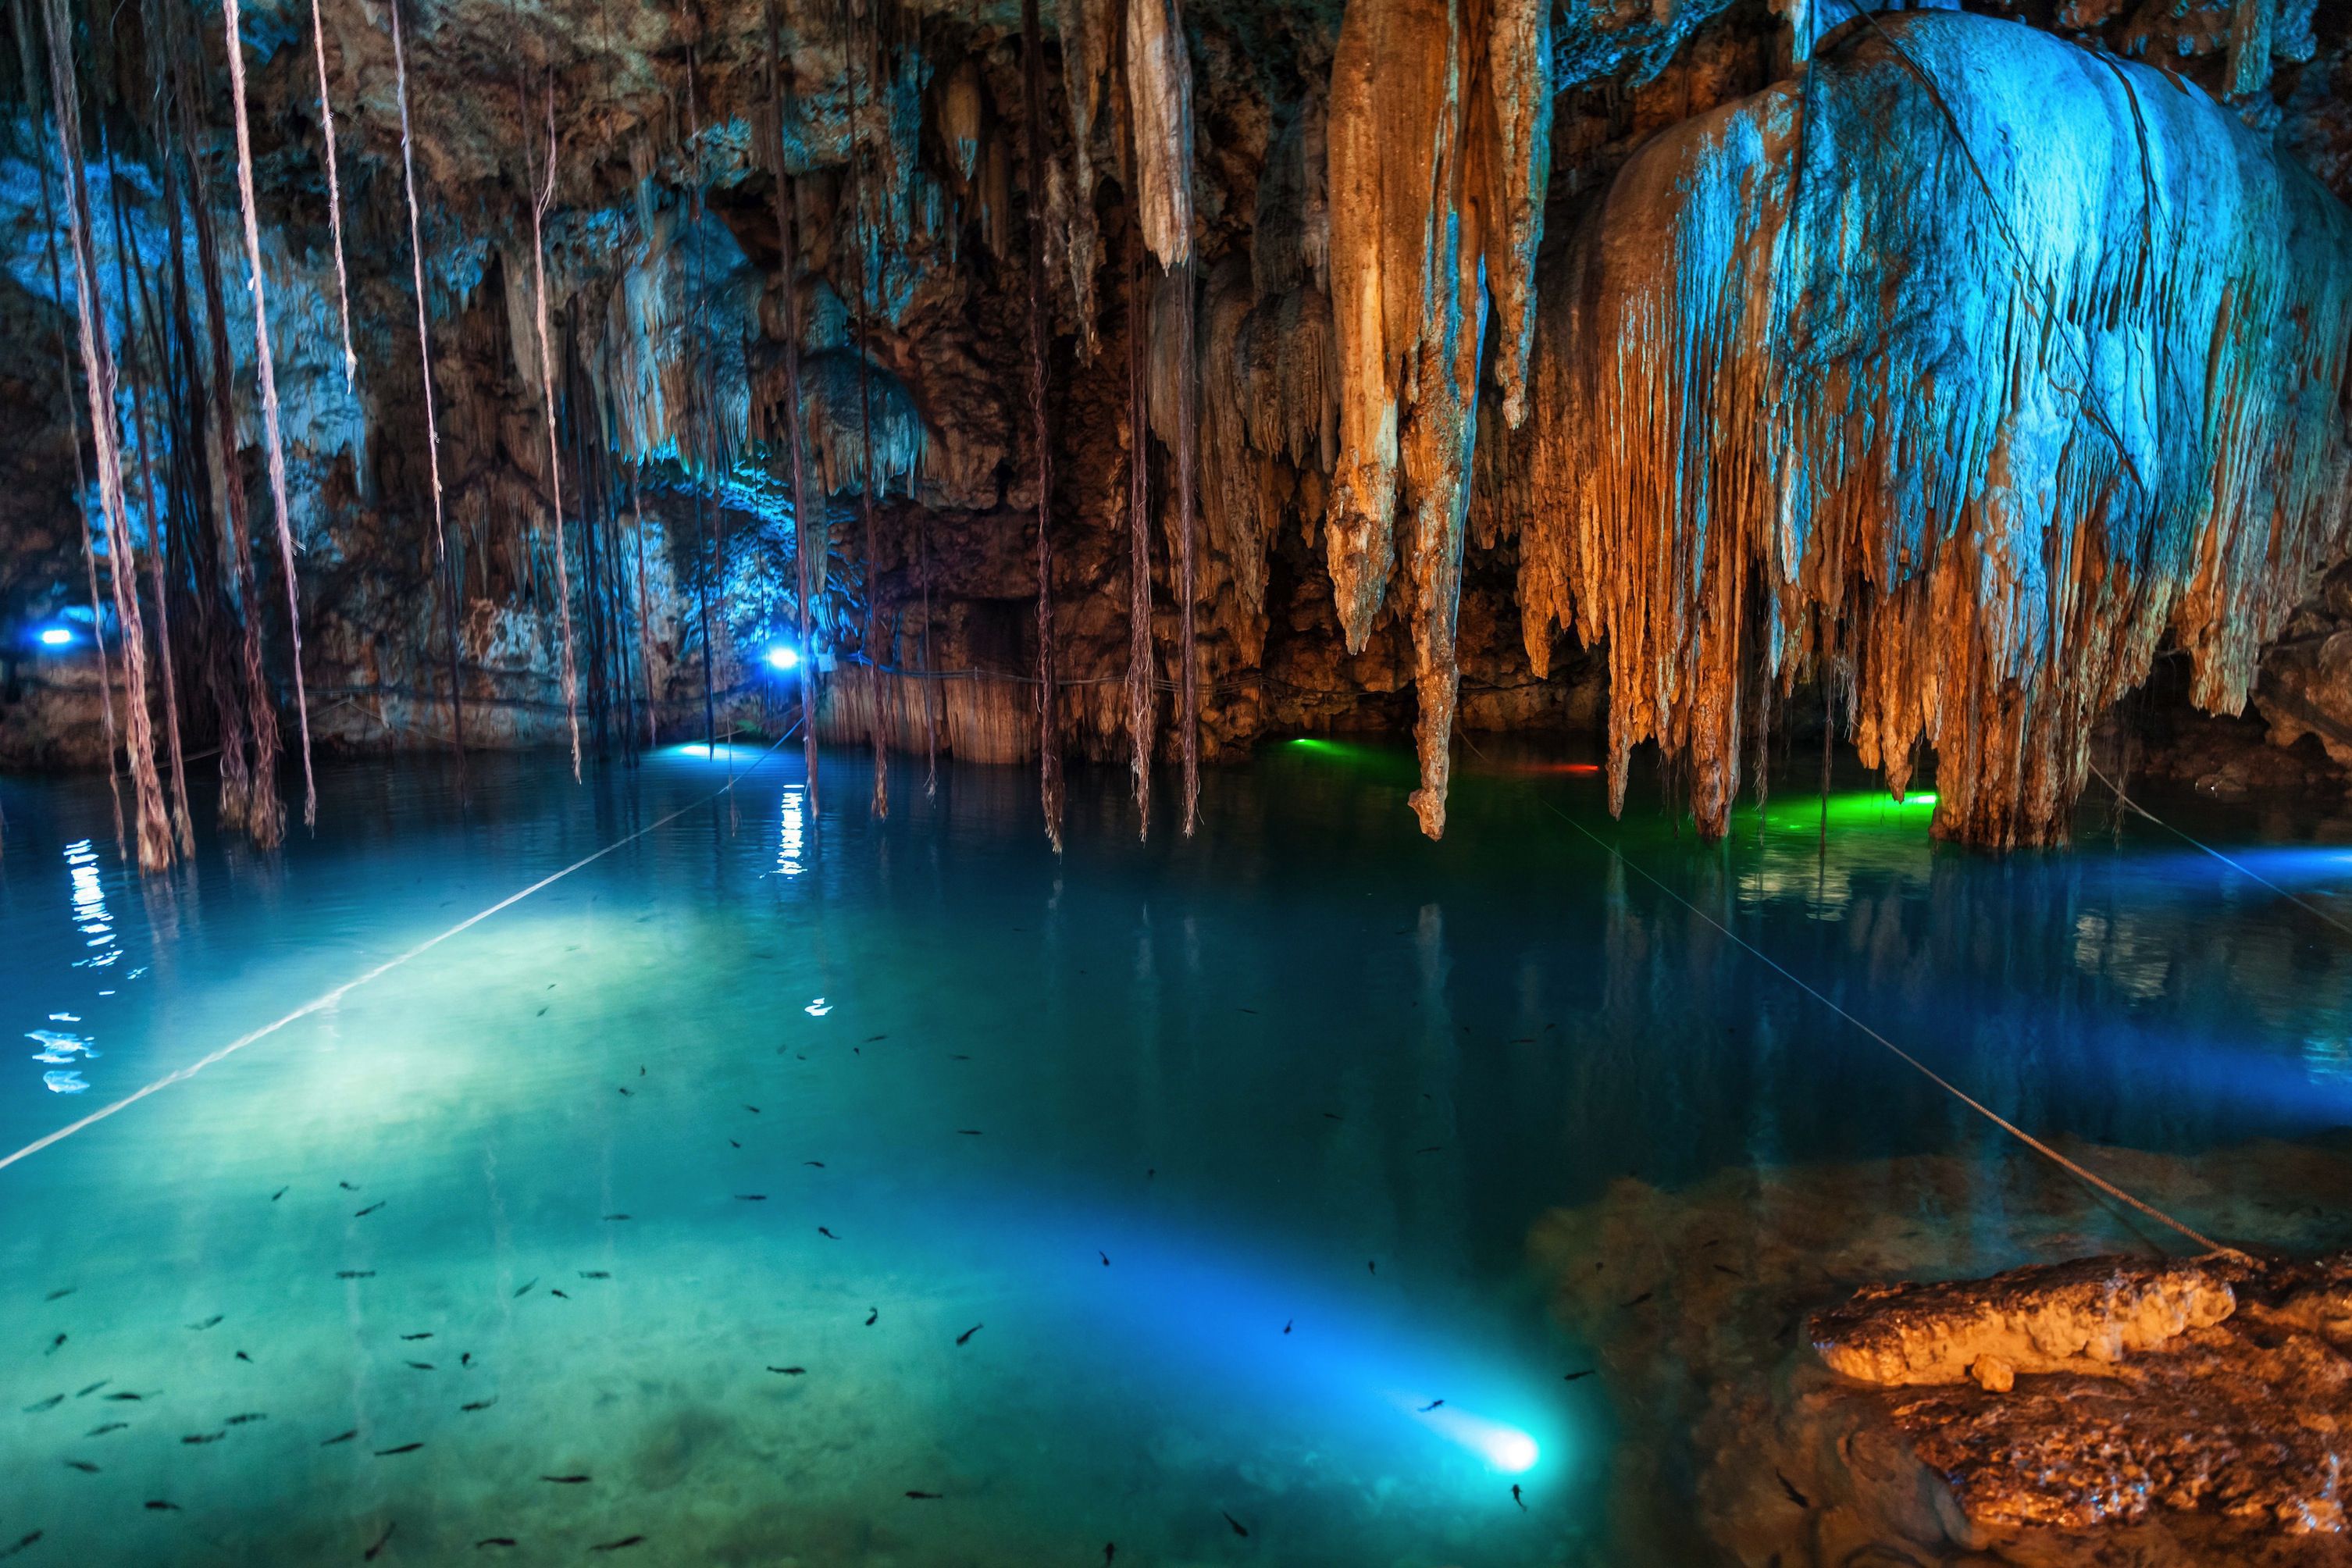 Illuminated Caves Photos